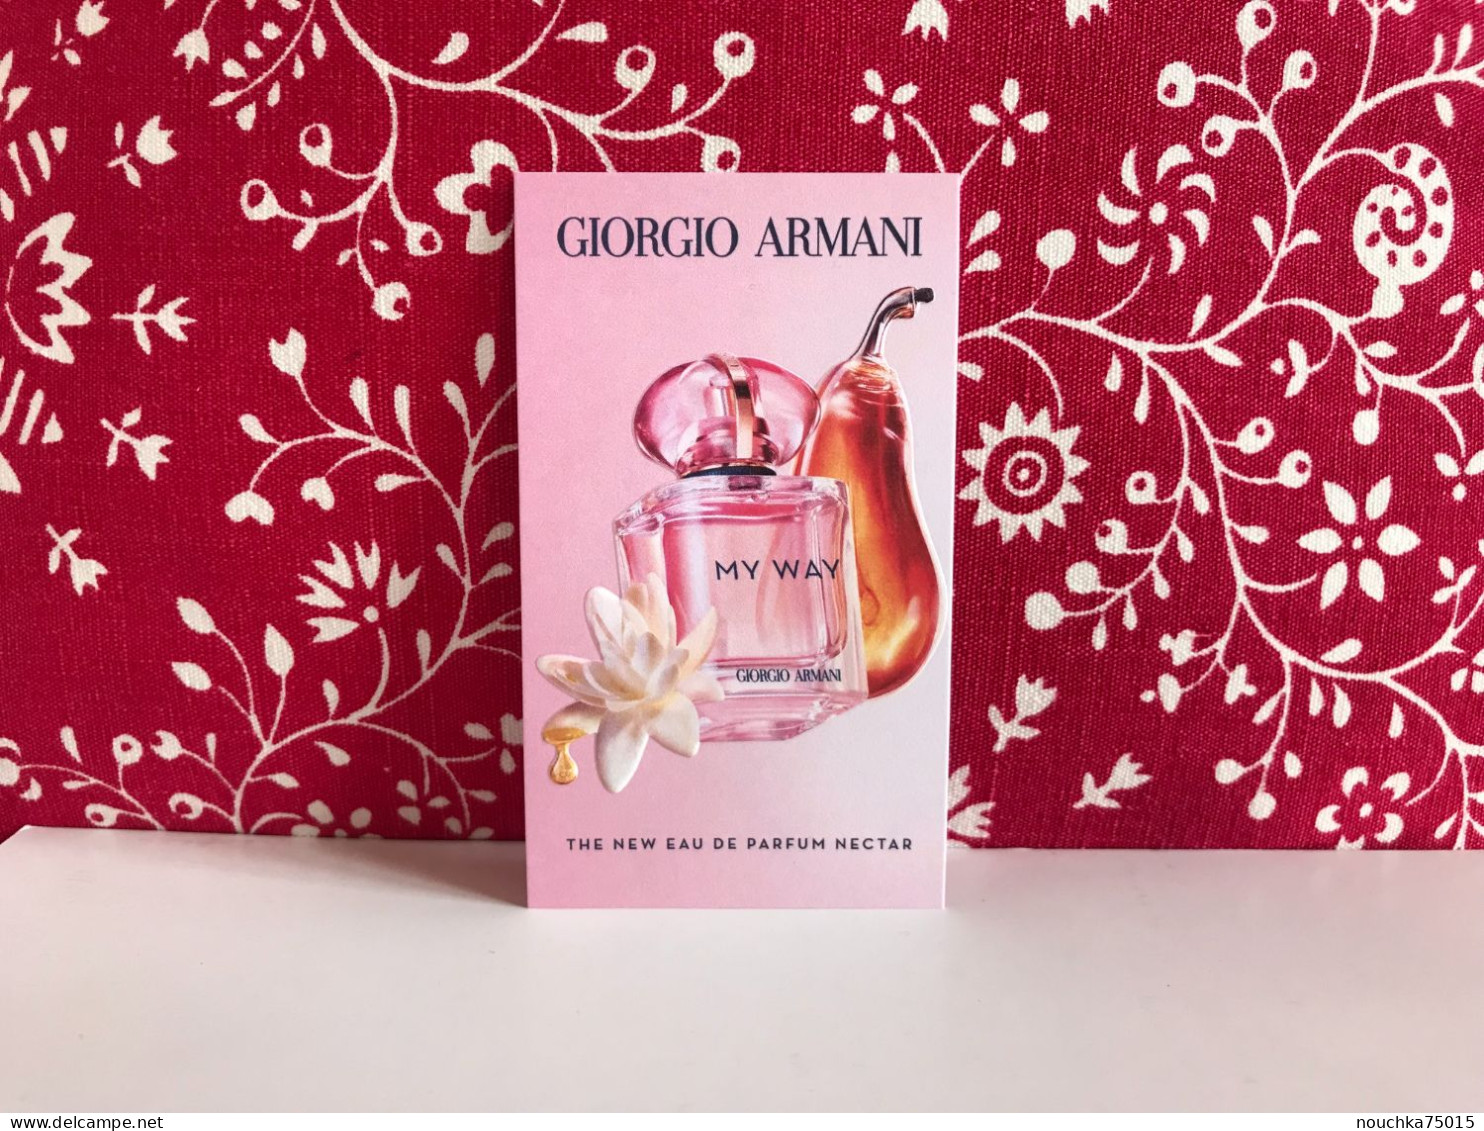 Giorgio Armani - My Way, Eau De Parfum Nectar - Modern (from 1961)